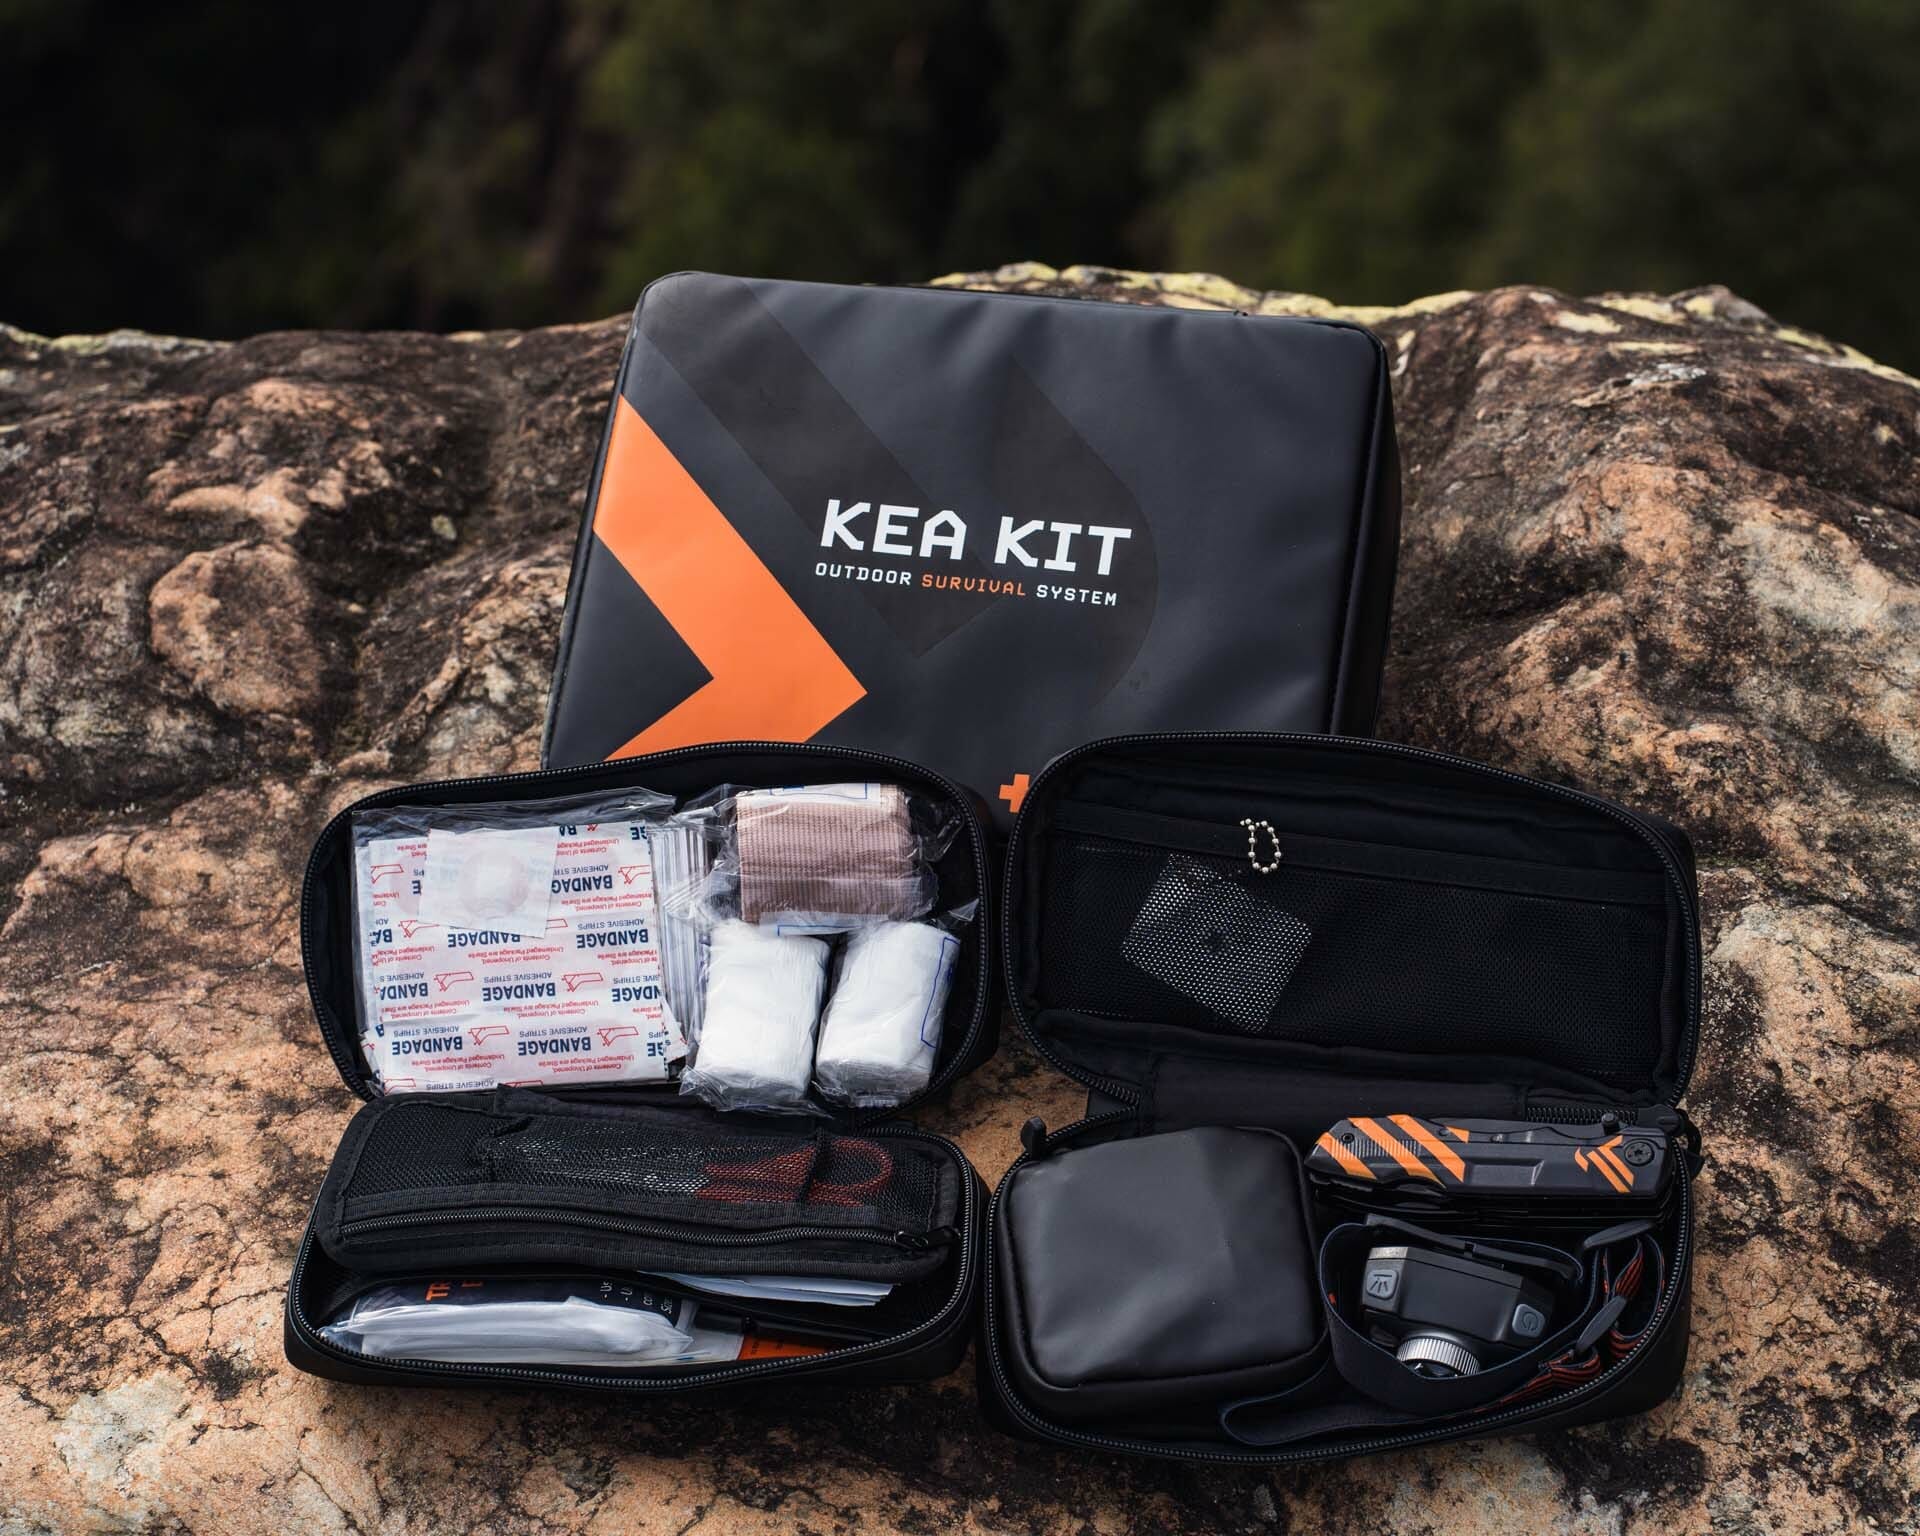 Kea Kit Ultimate Outdoor Survival System - Review, by Kel Sanson